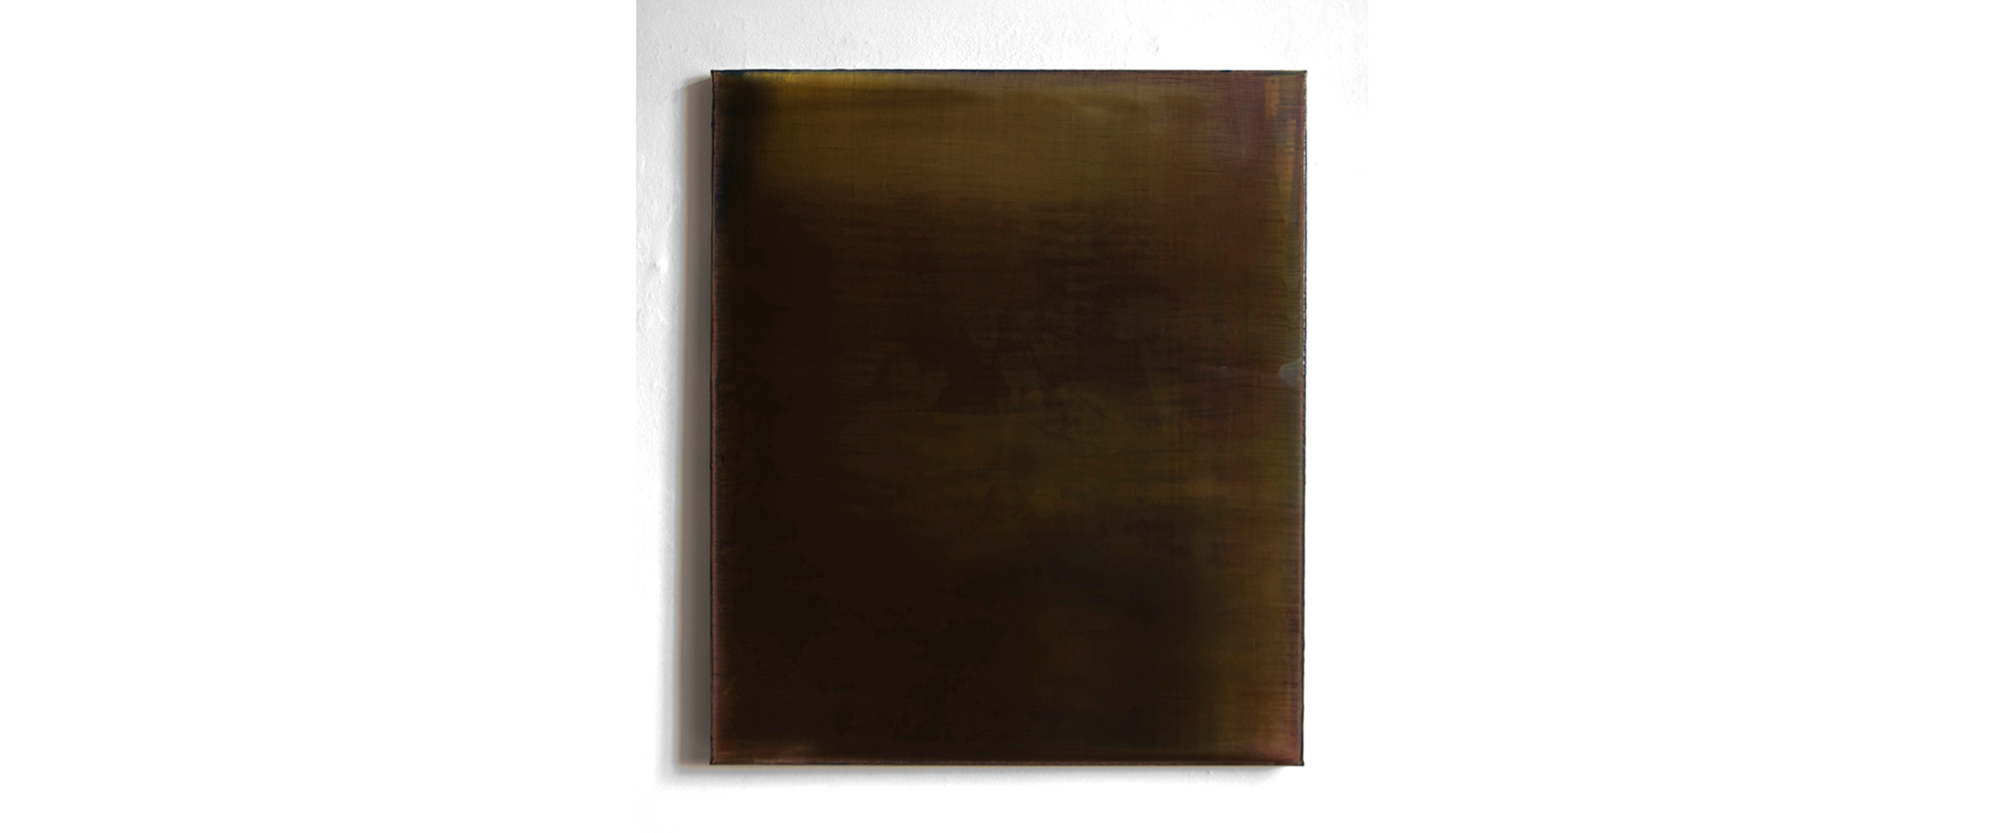 20160415, Acryl auf Leinwand, 120 x 90 cm, 2016